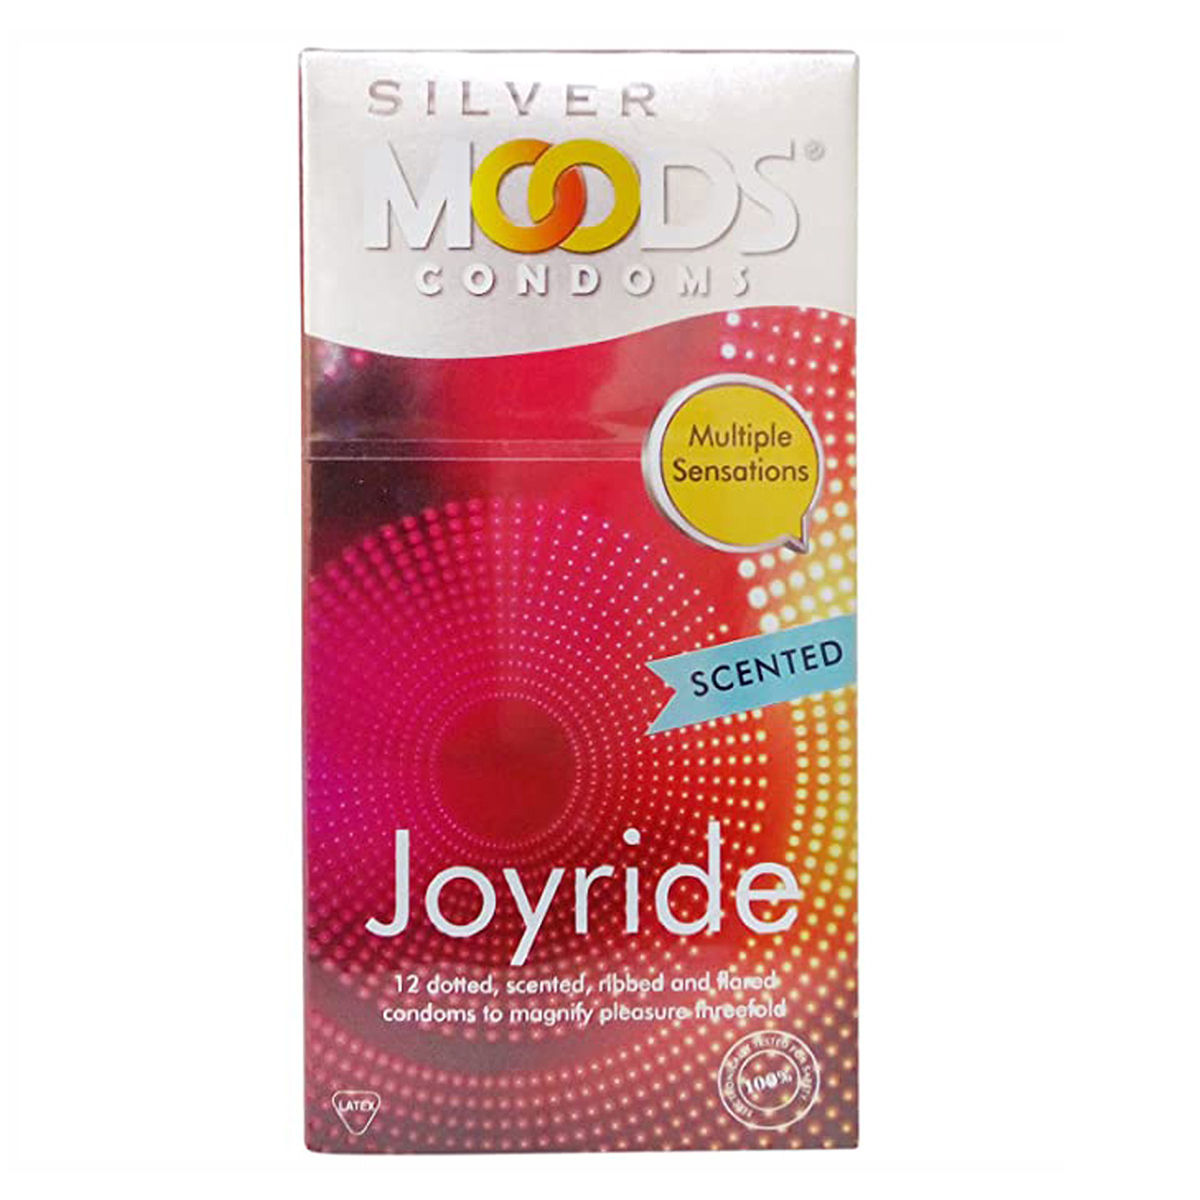 Buy Moods Silver Joyride Condoms, 12 Count Online